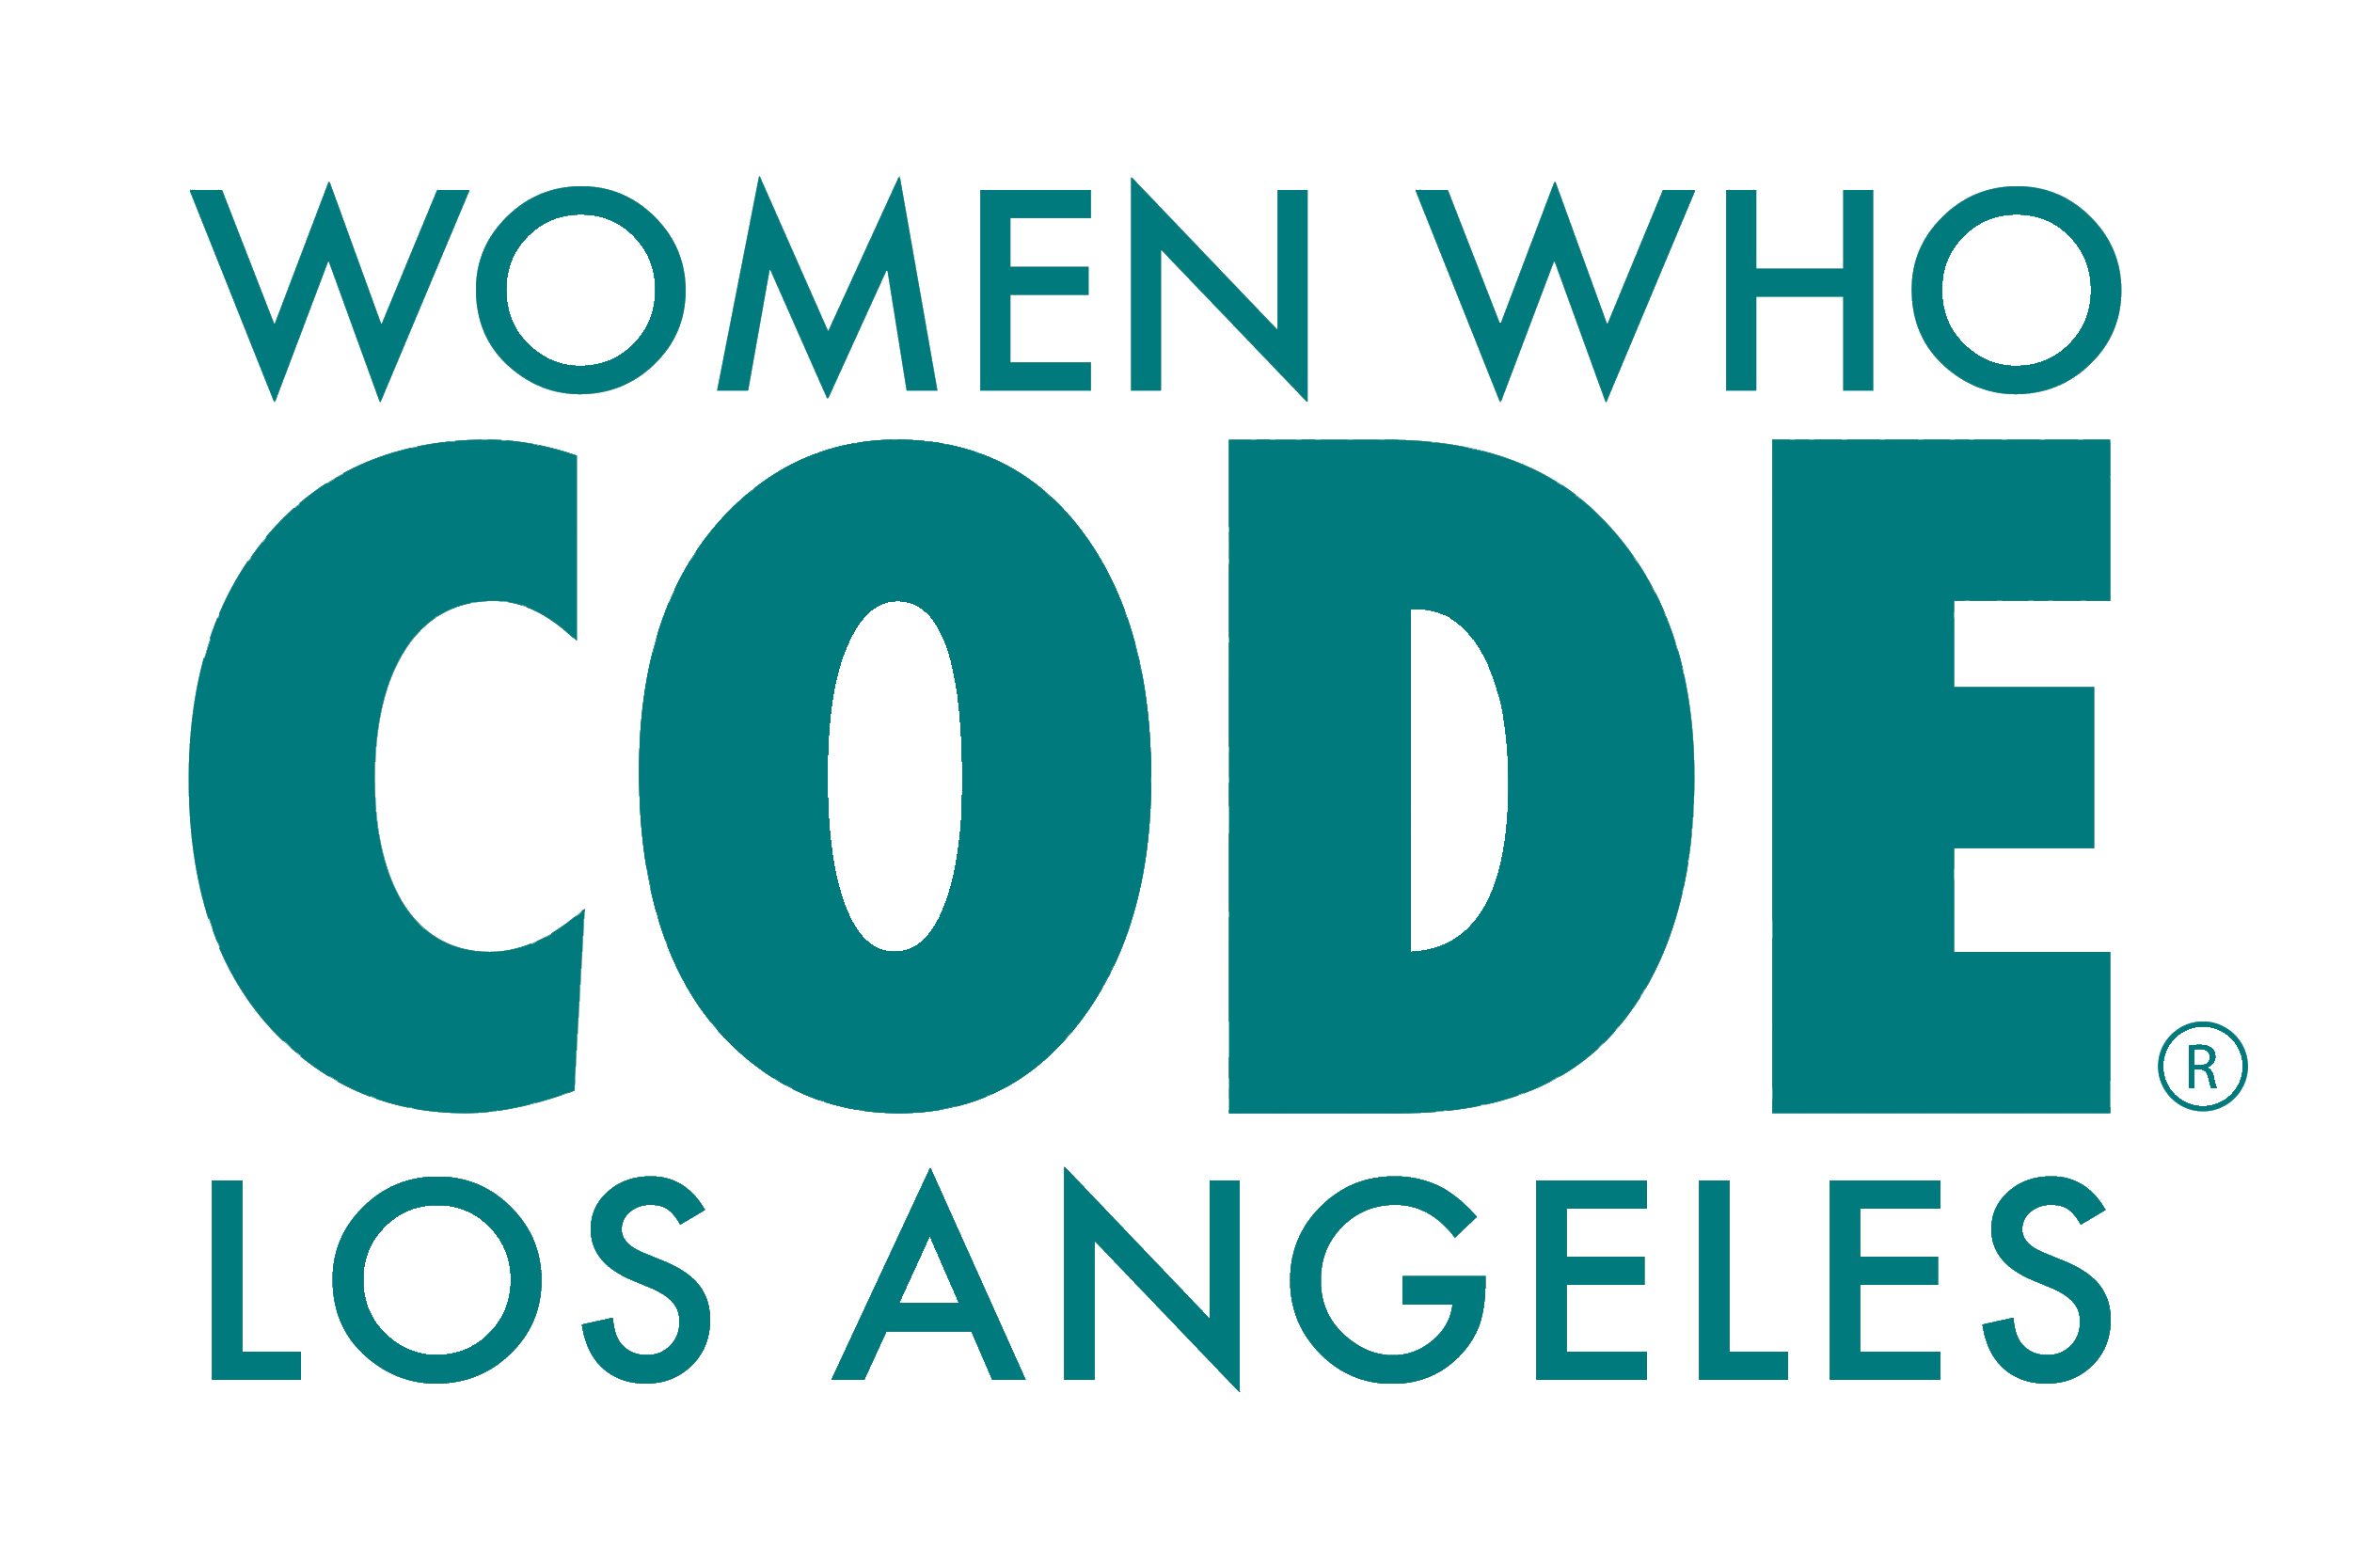 Women Who Code LA